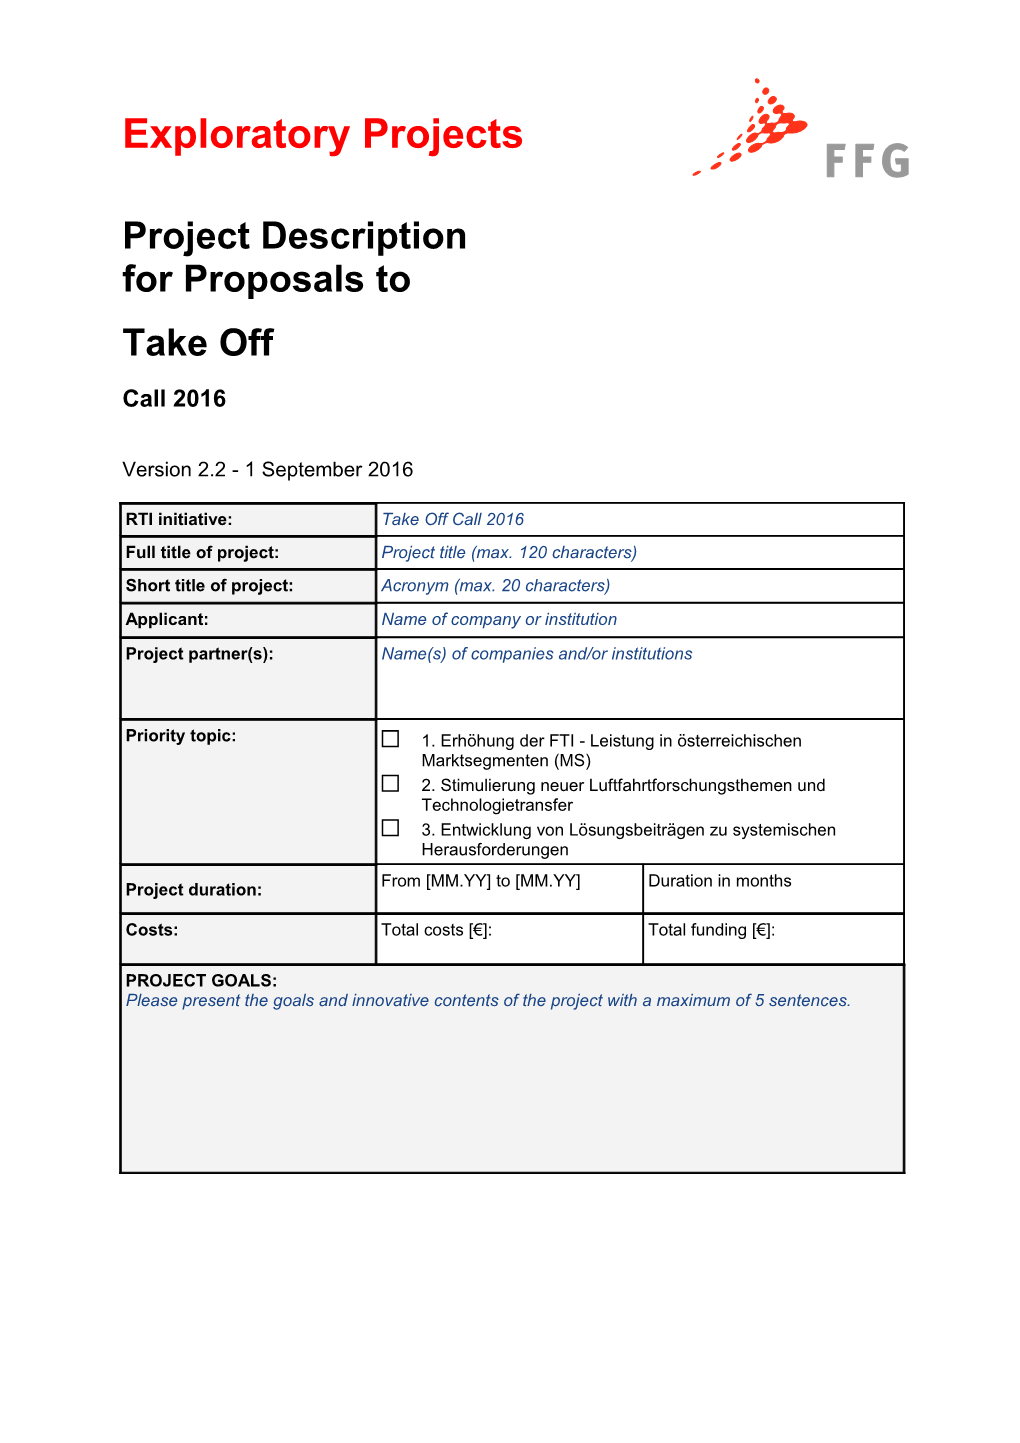 Project Description for Proposals To